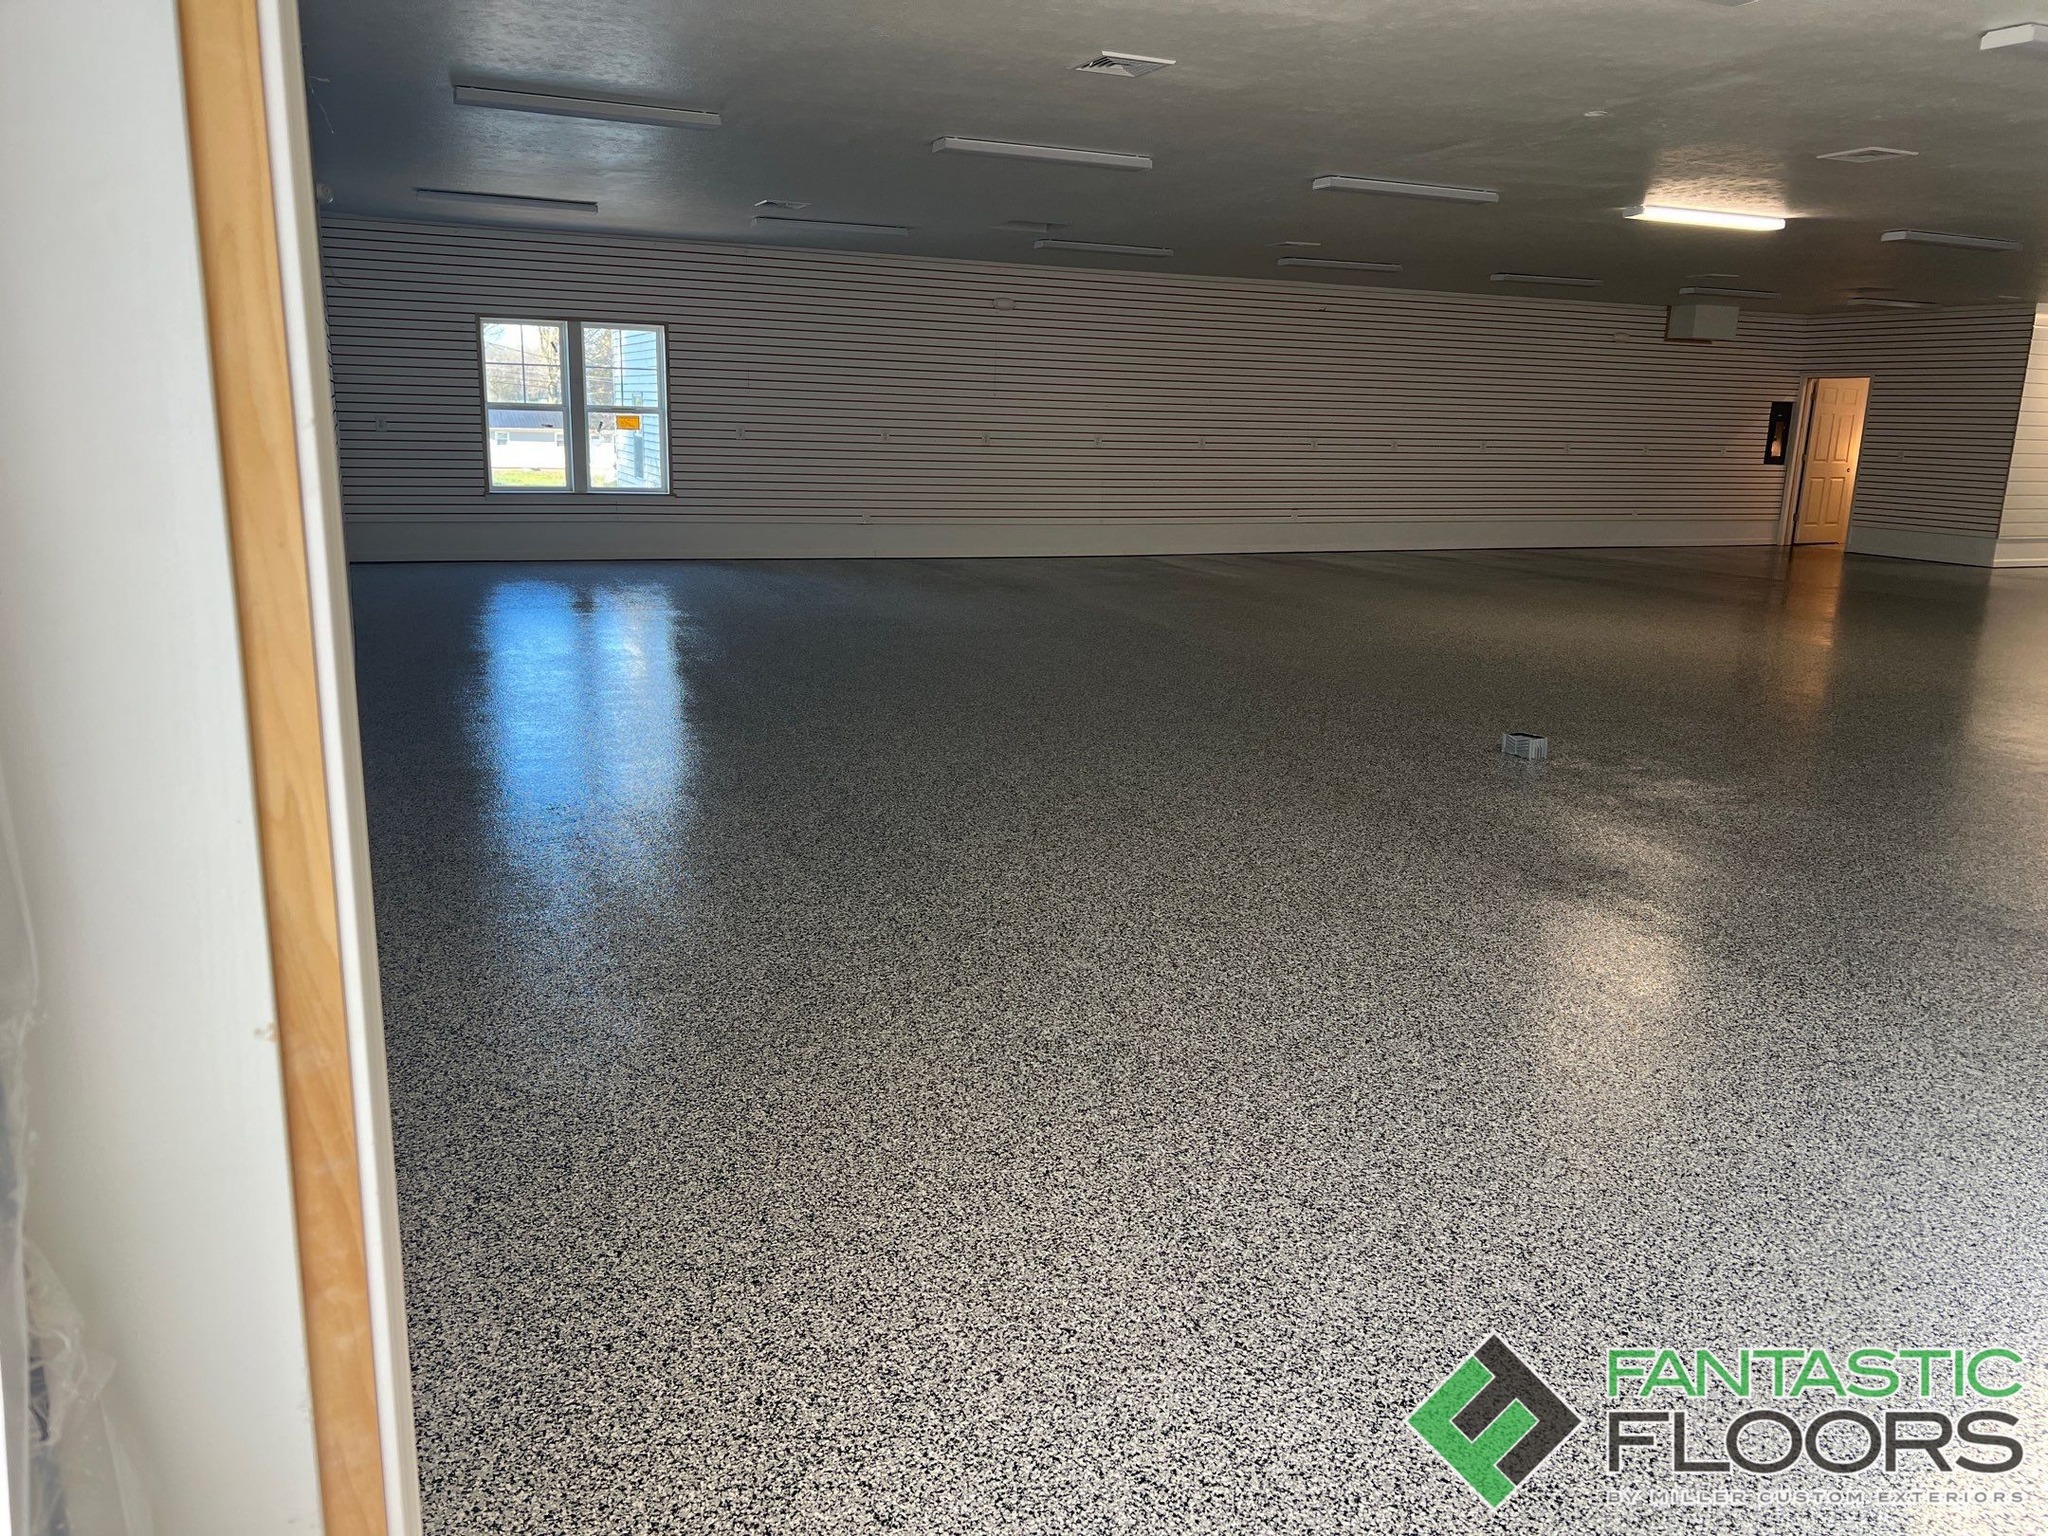 Fantastic Floors by Miller Custom Exteriors 55 Eckard Rd, Dalton Ohio 44618